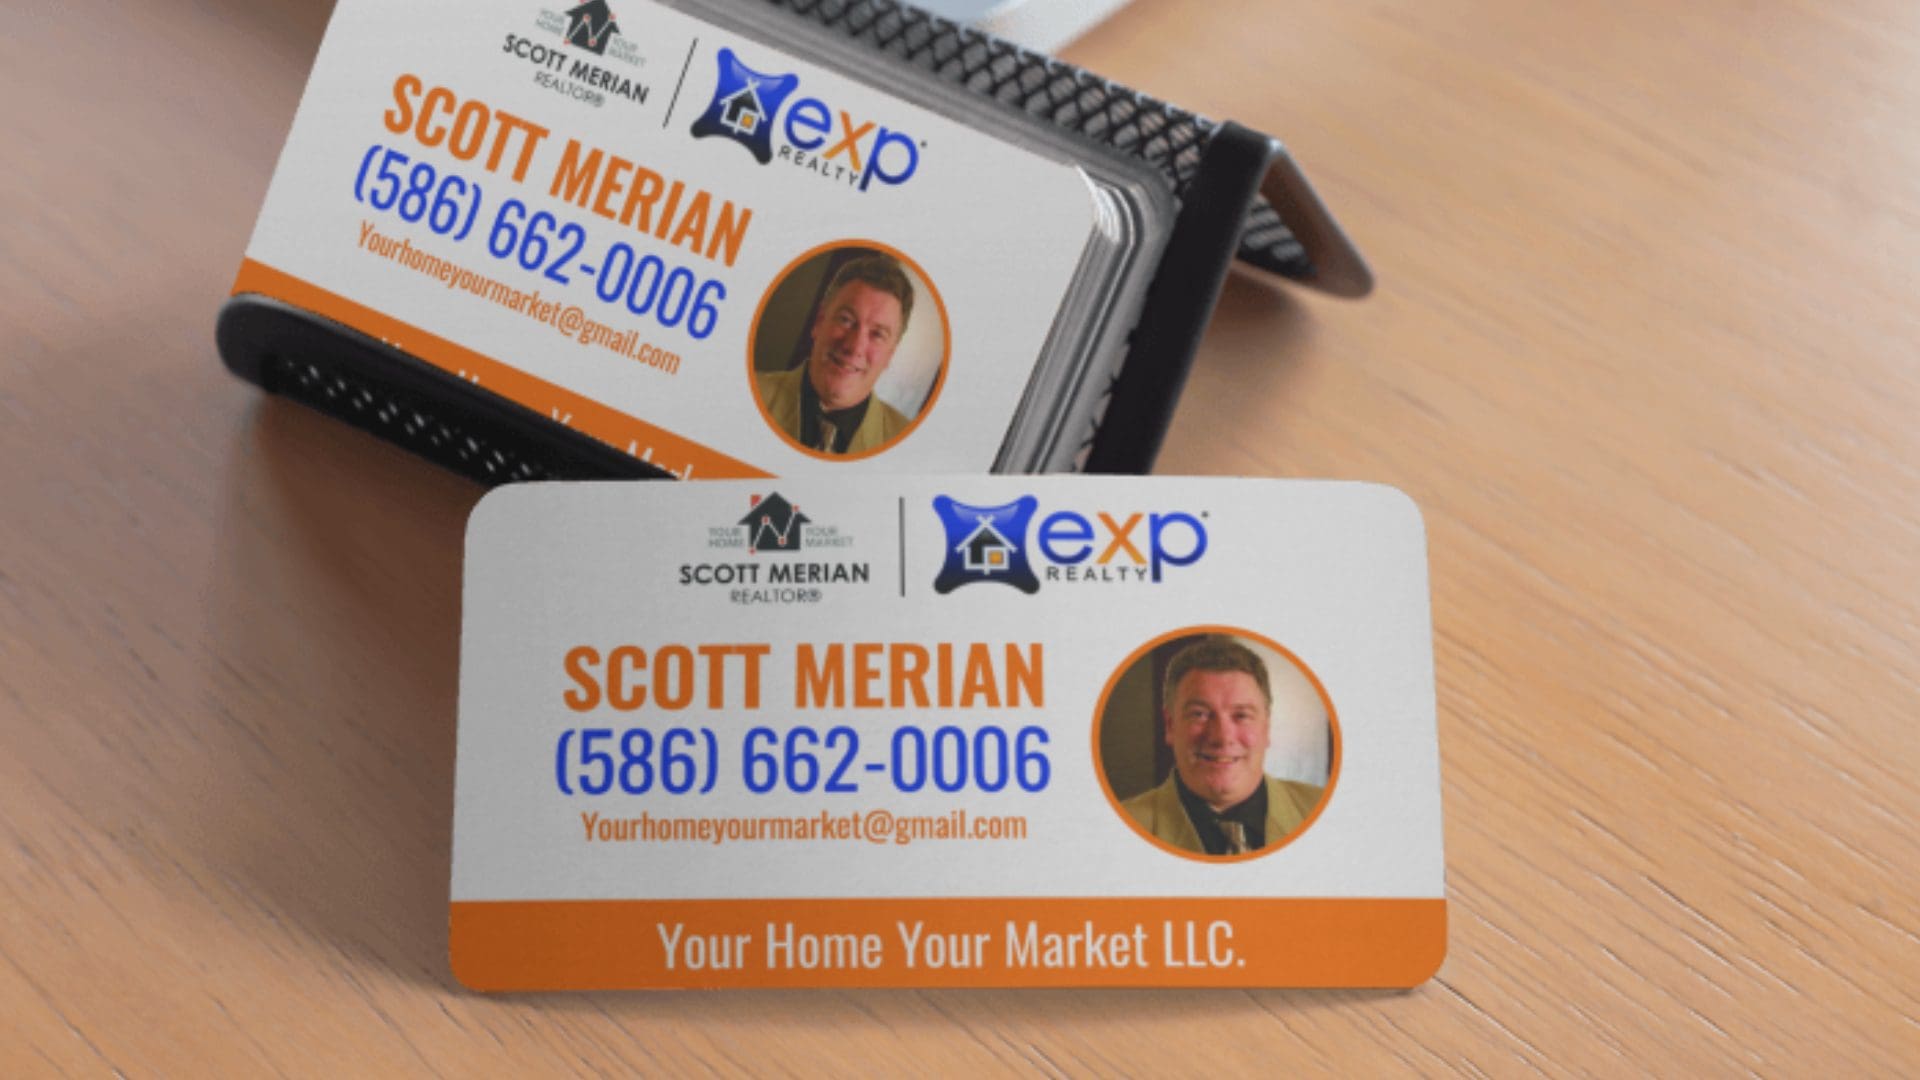 Your Home Your Market LLC - Scott Merian's Cards (5)